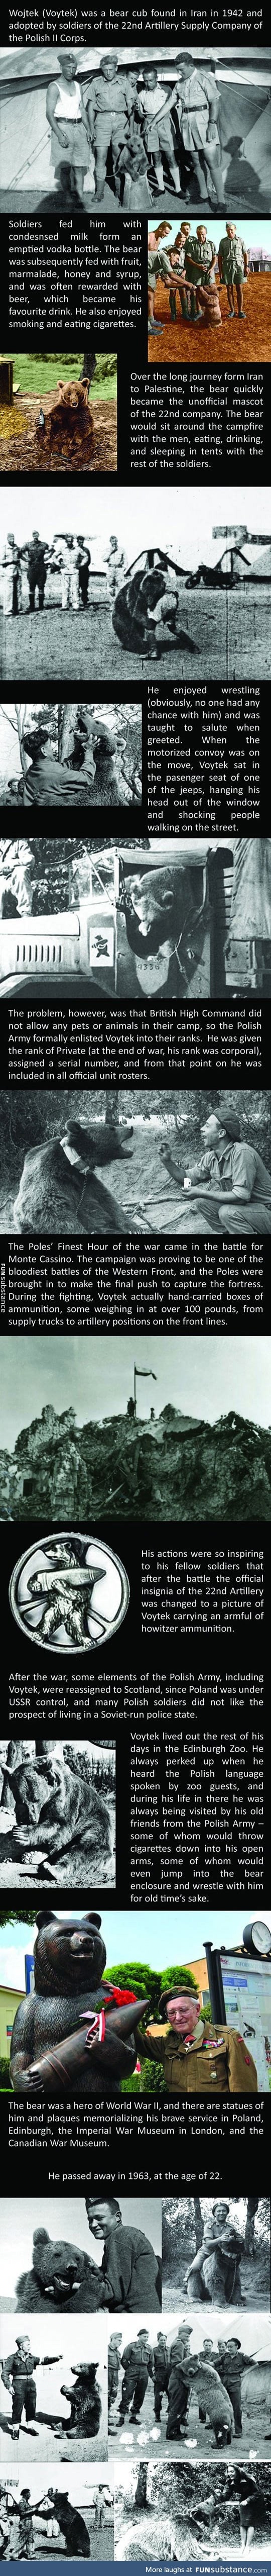 The incredible story of voytek the soldier bear